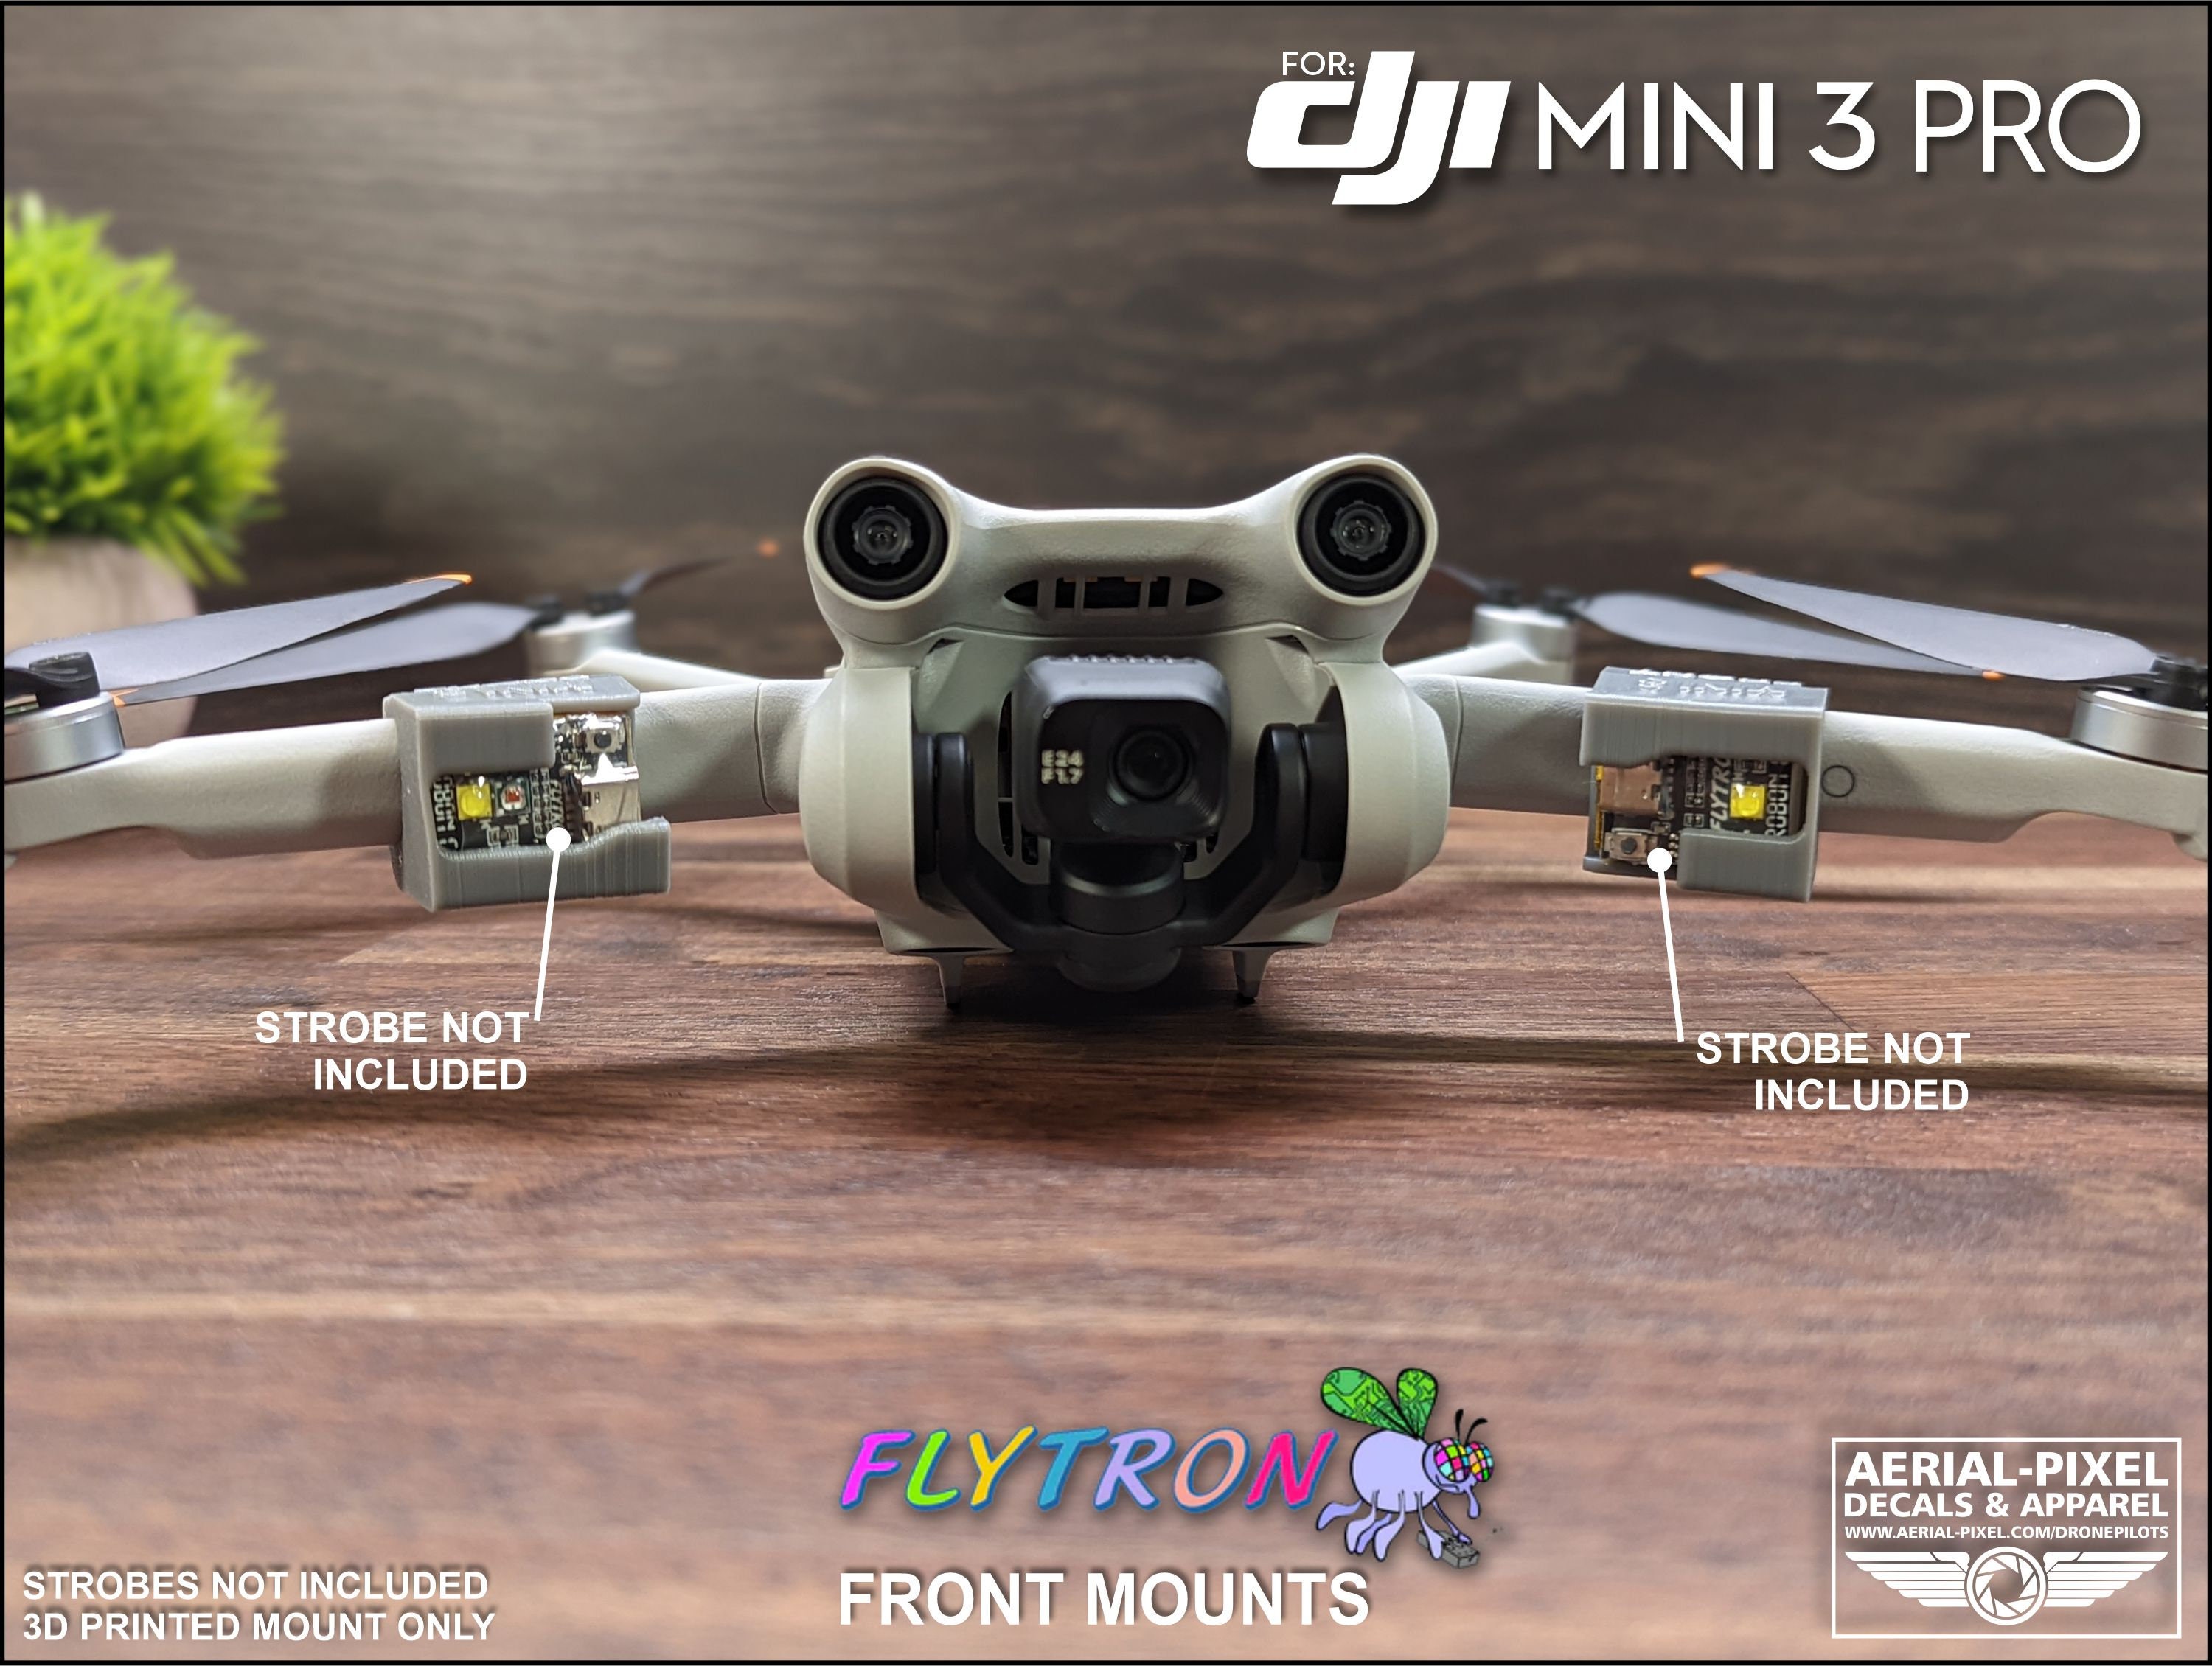 DJI Mini 3 Pro Strobe Light Mounts for Flytron Strobes strobe